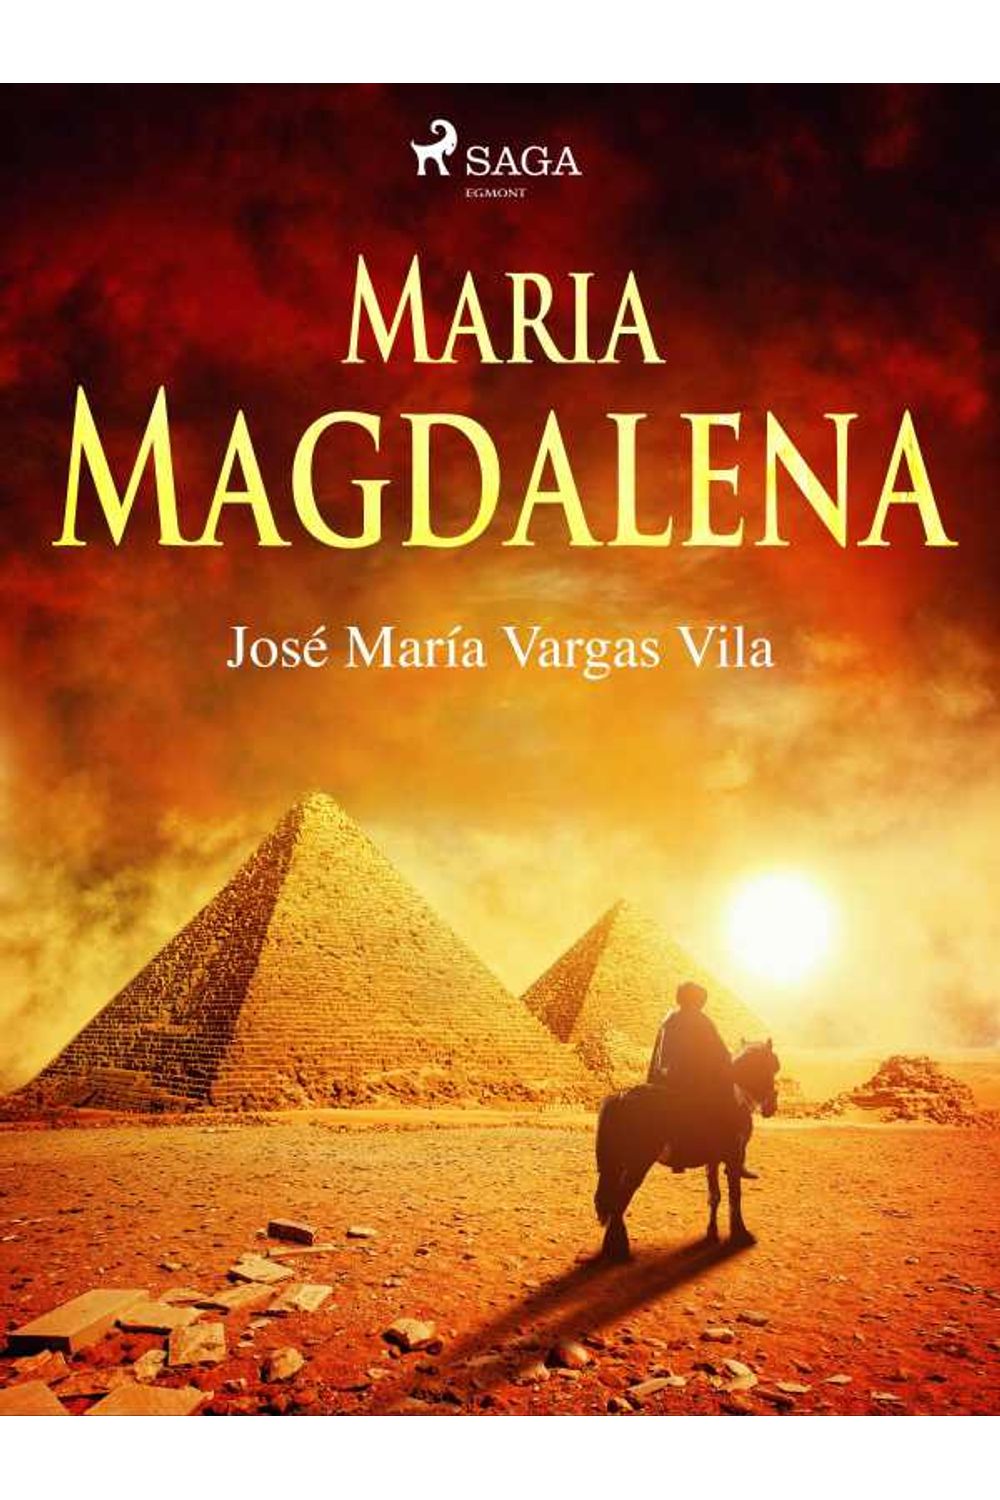 bw-mariacutea-magdalena-saga-egmont-9788726680386